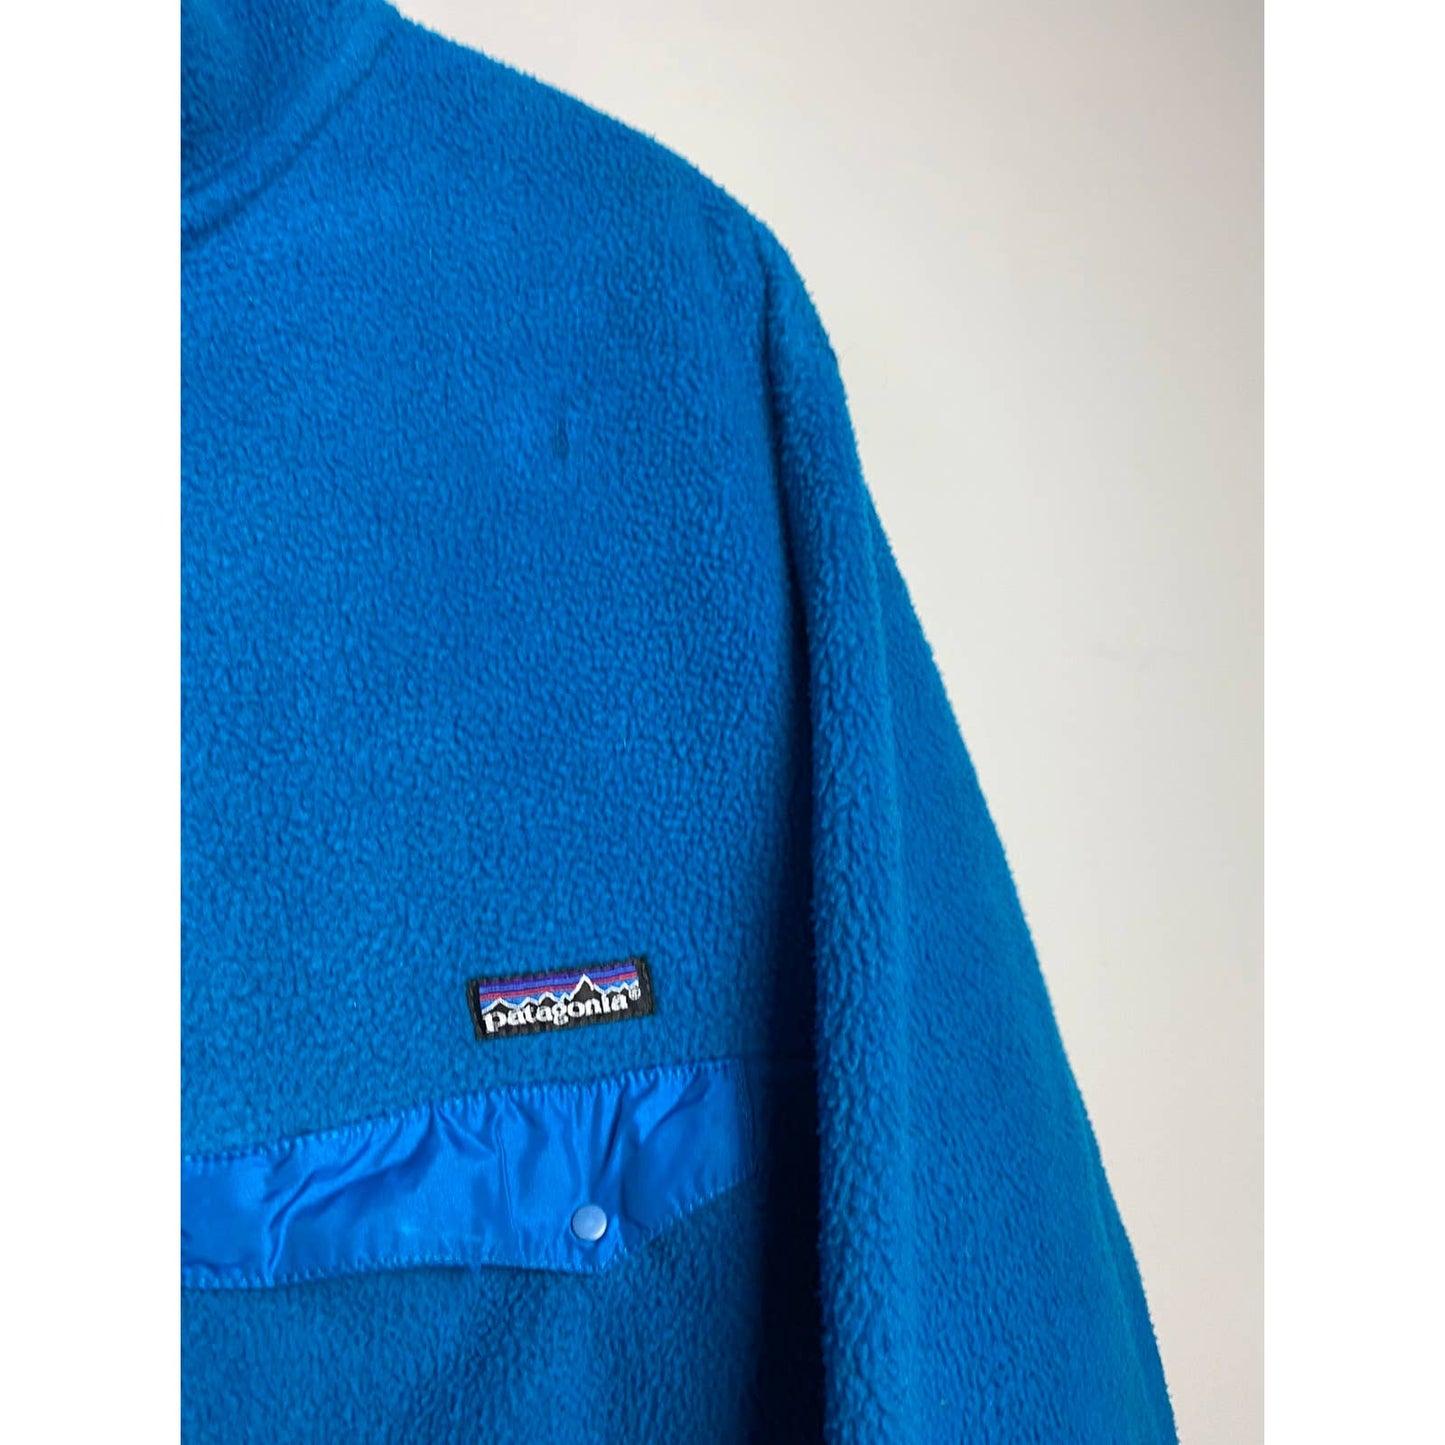 Patagonia vintage blue fleece quarter zip